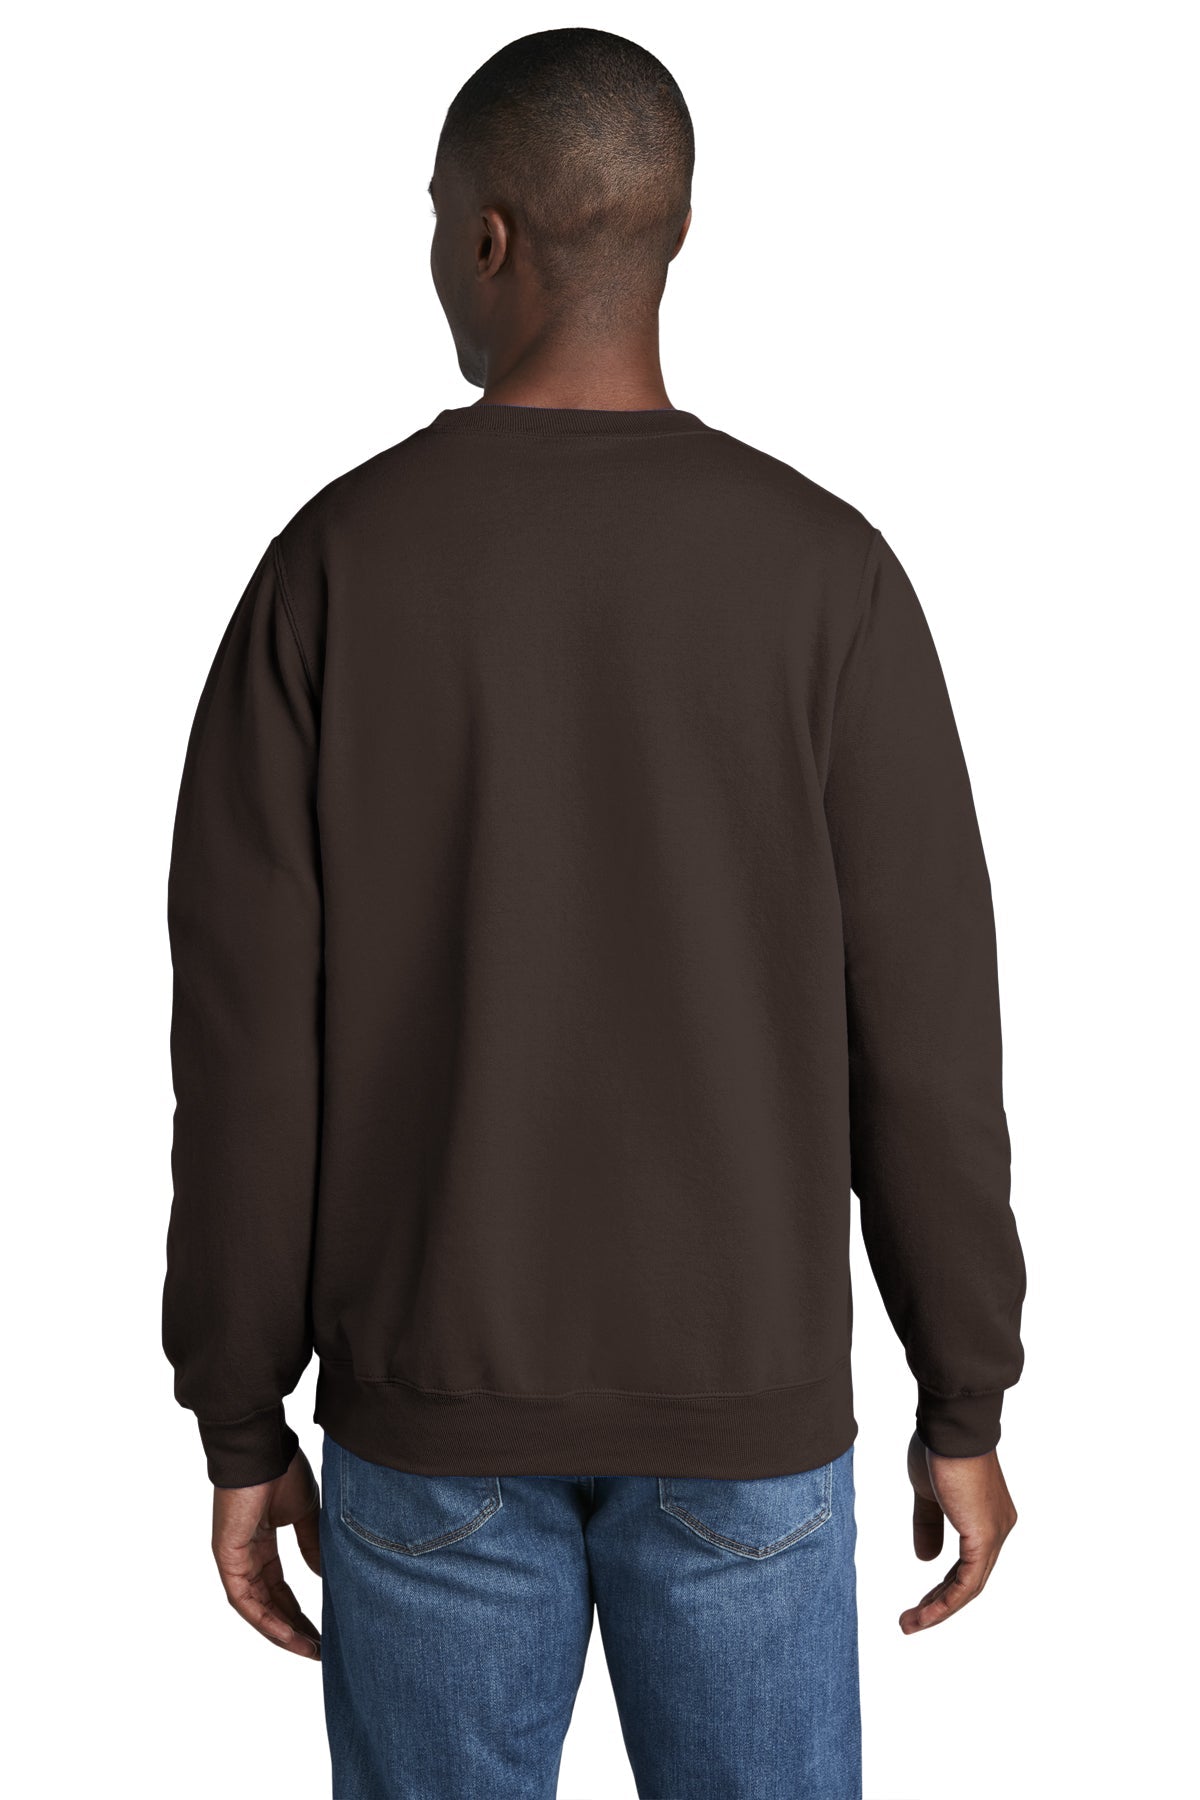 port & company_pc78 _dark chocolate brown_company_logo_sweatshirts